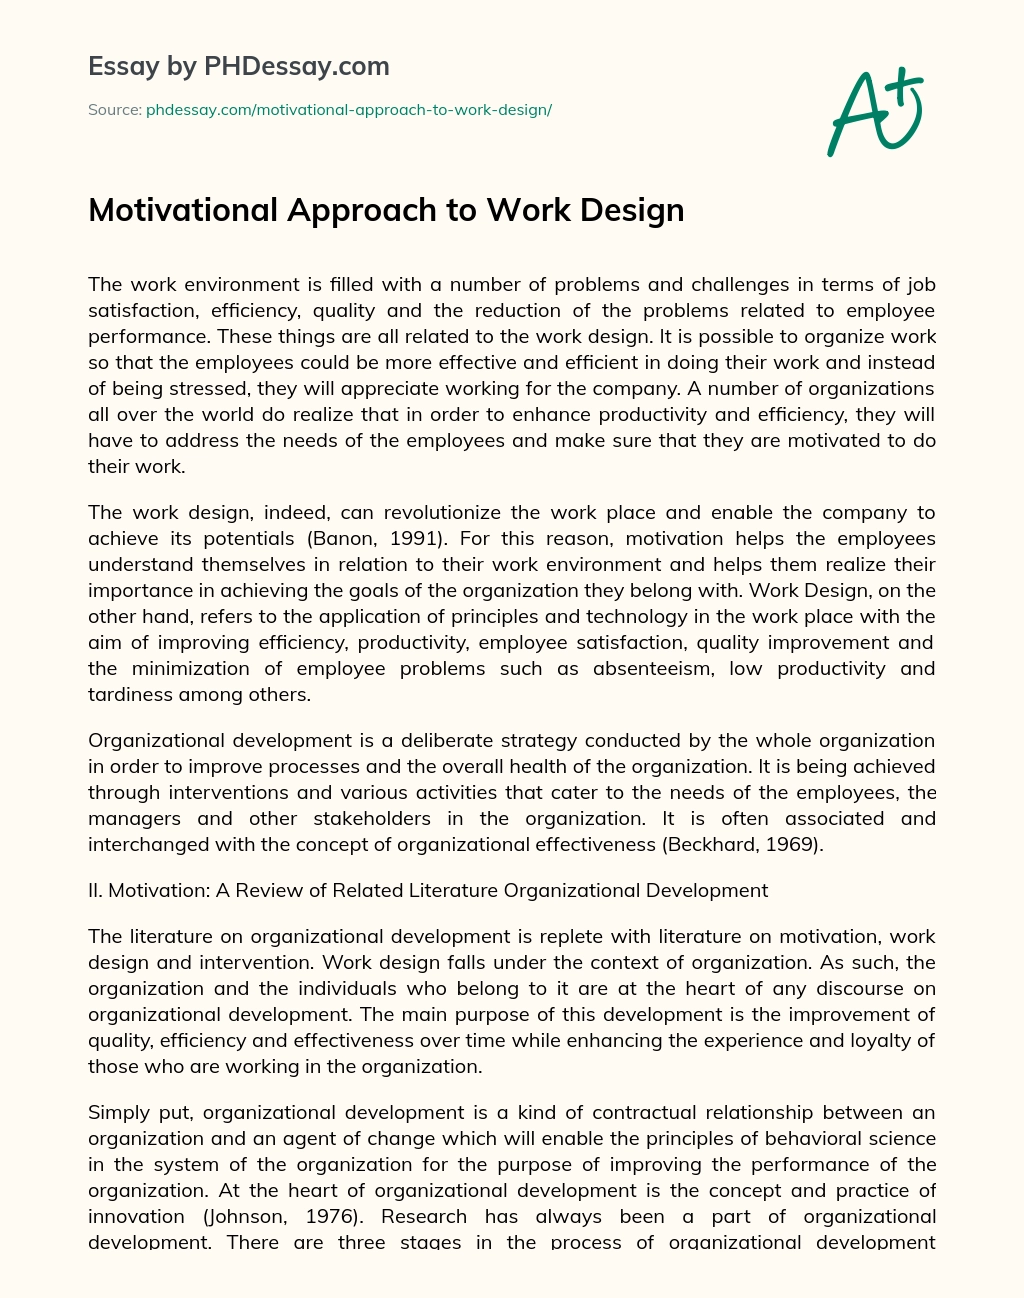 Motivational Approach to Work Design essay